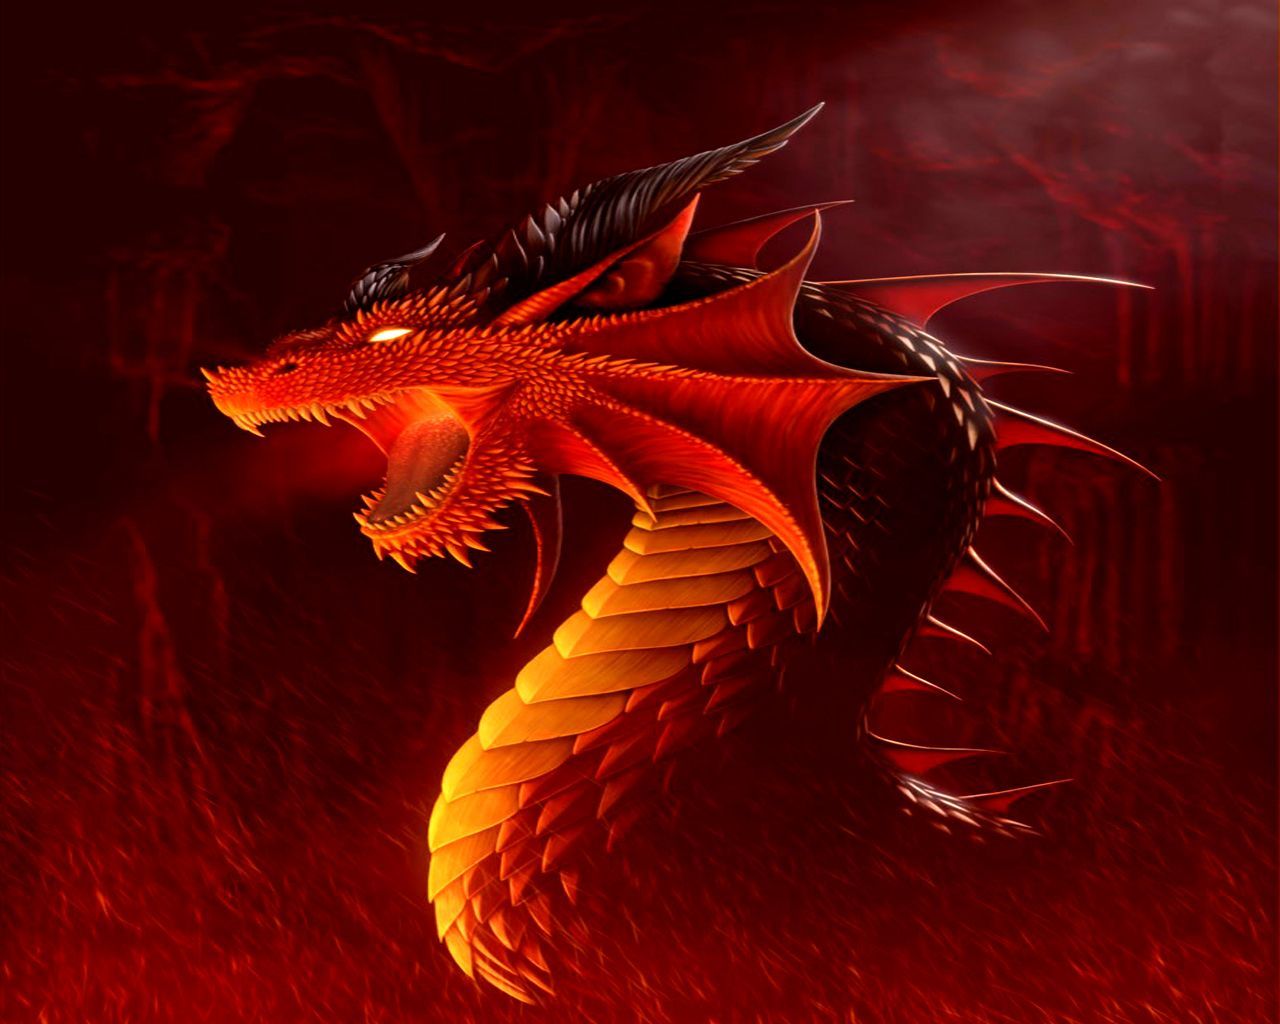 Dragons Photo: Dragons. Dragon picture, Dragon image, Fantasy dragon